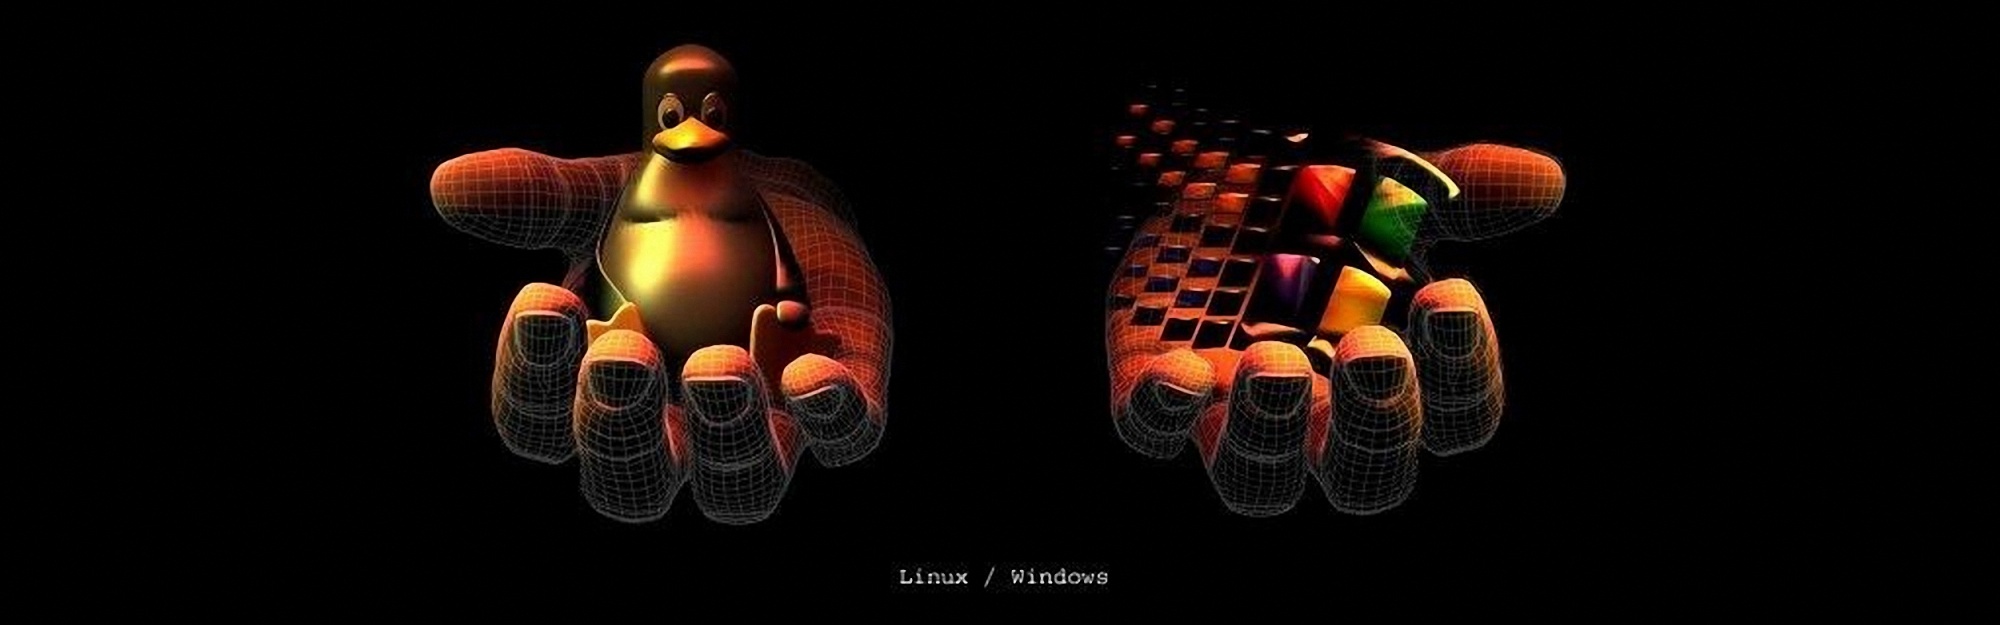 Linux Vs Windows Hand Creative